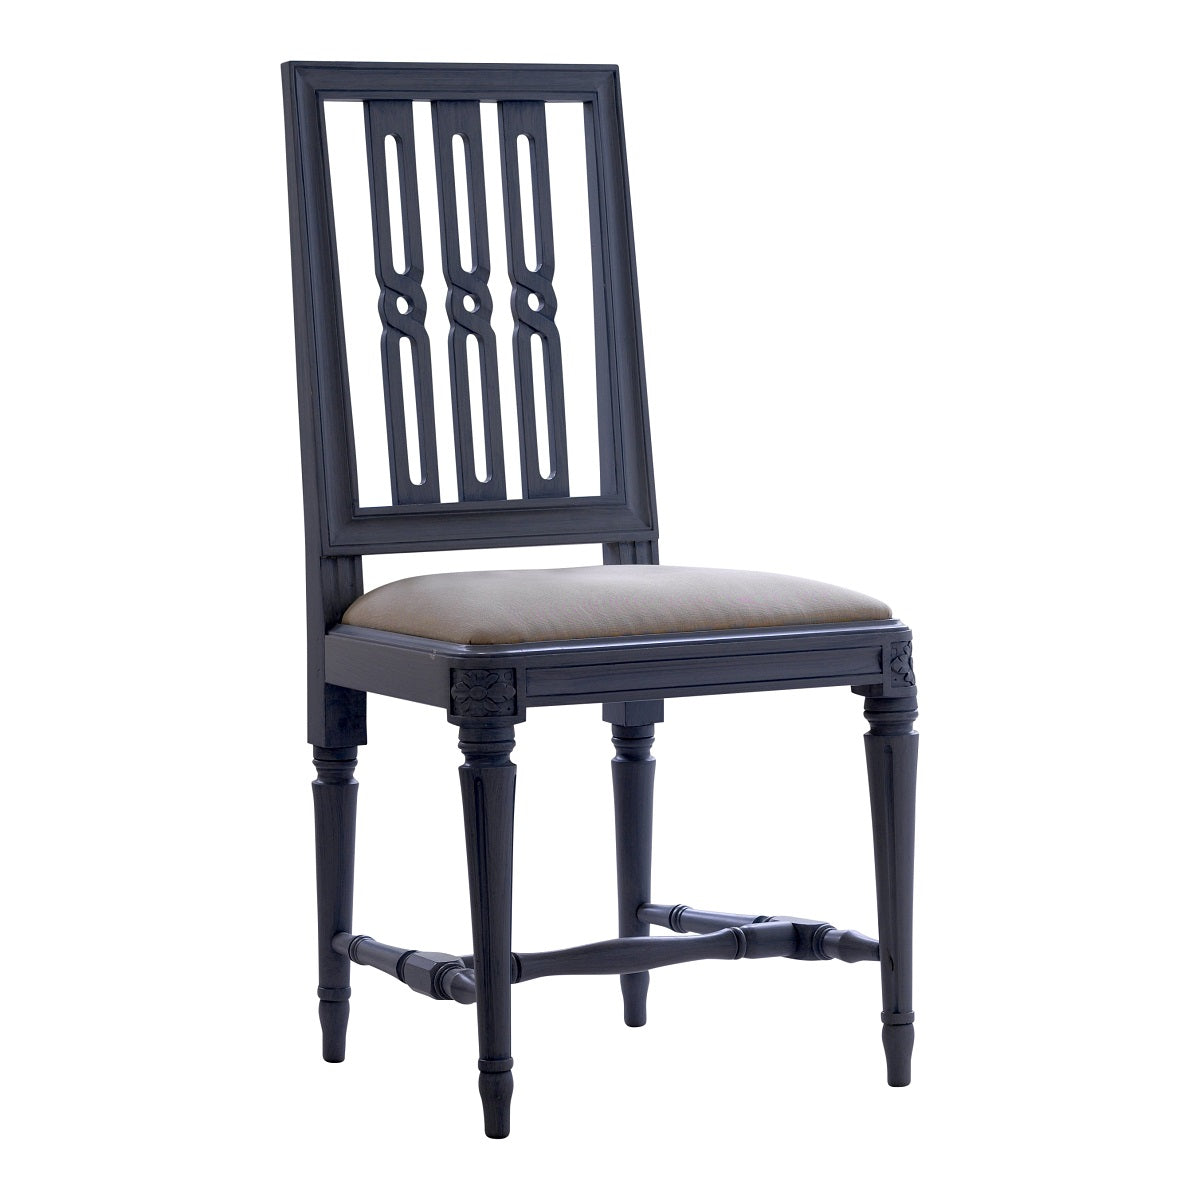 Medivi Wooden Chair